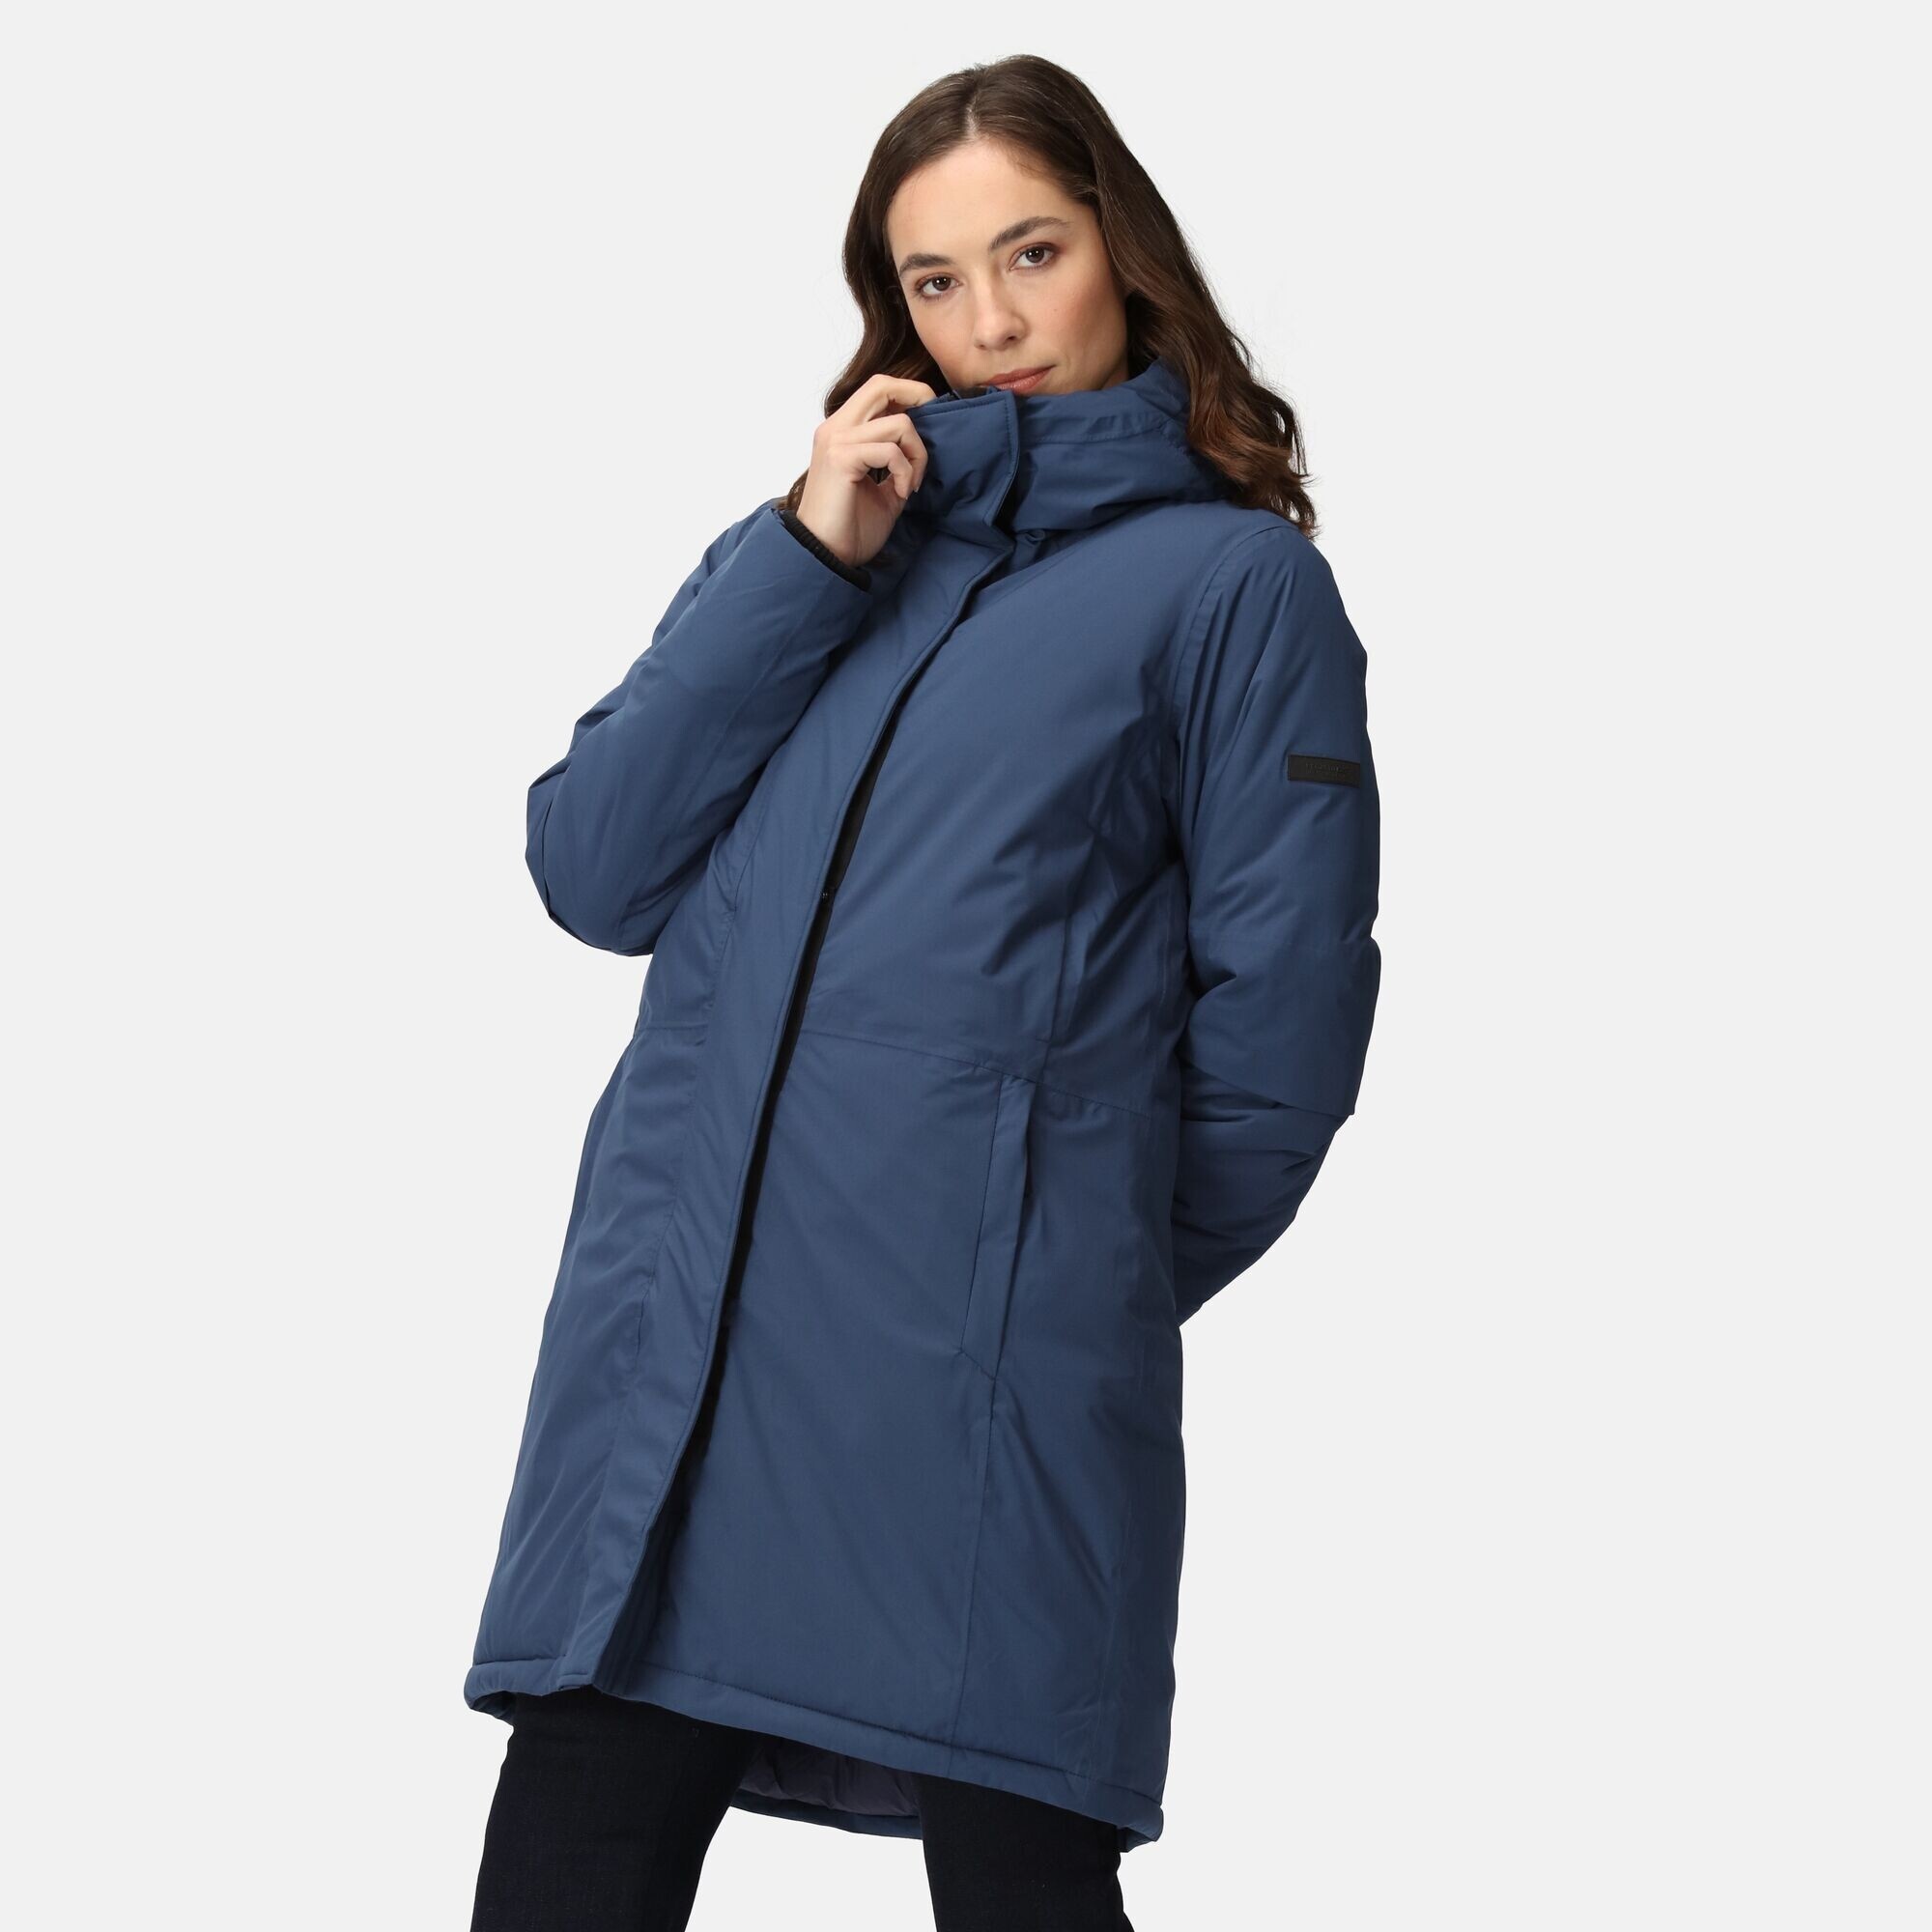 Dámský zimní kabát Yewbank III RWP384-VD4 modrý - Regatta 36